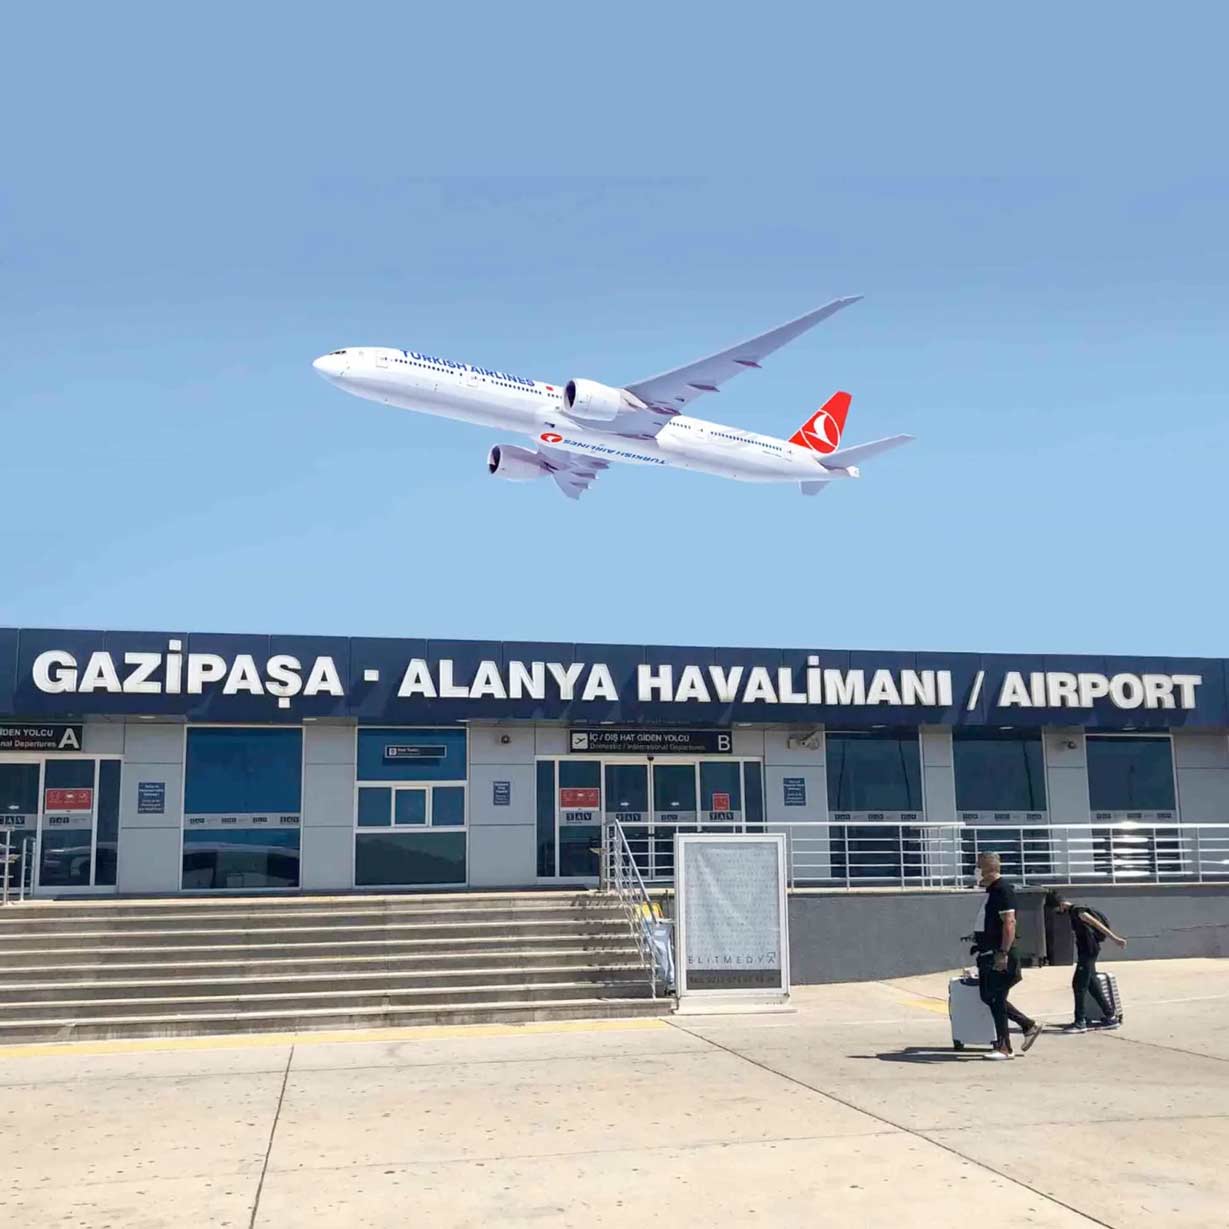 Gazipaşa-Alanya (GZP) Airport Transfer